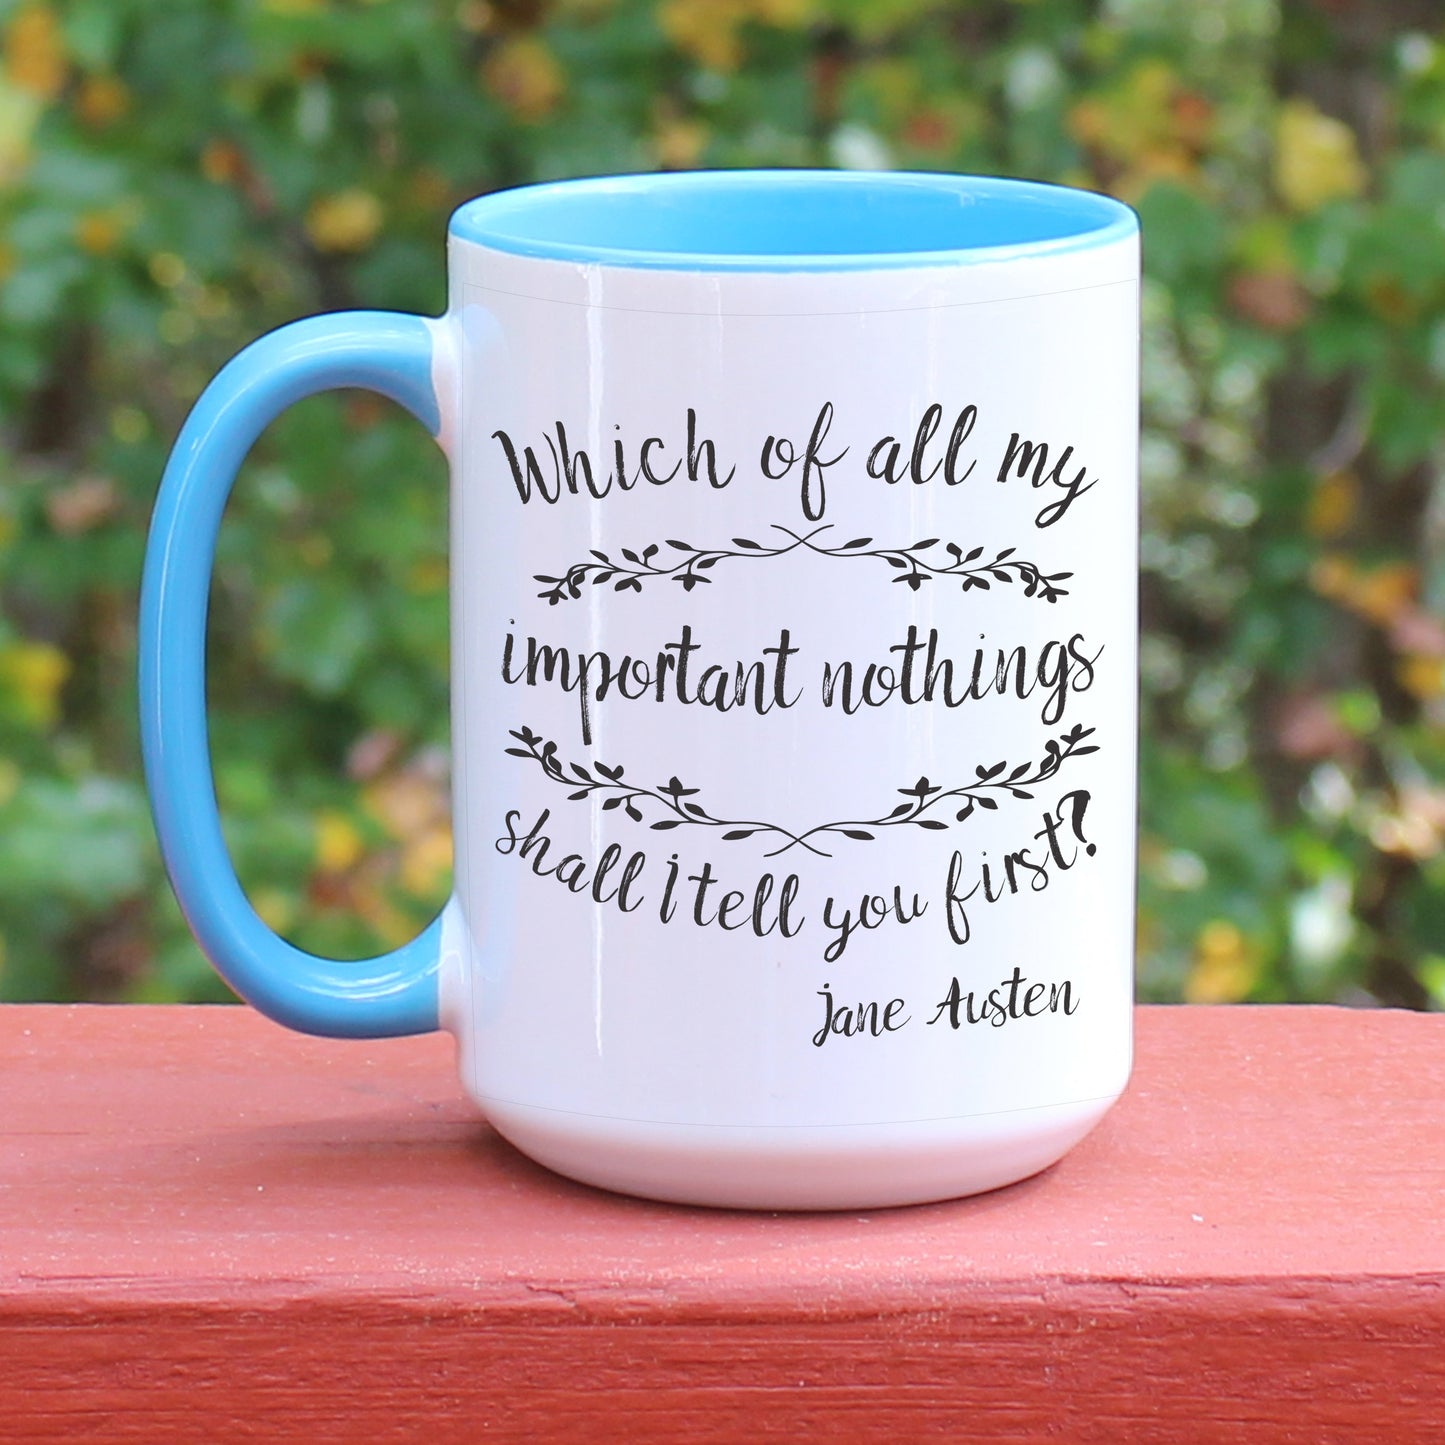 Jane Austen Pride and Prejudice quote white coffee mug with blue handle.